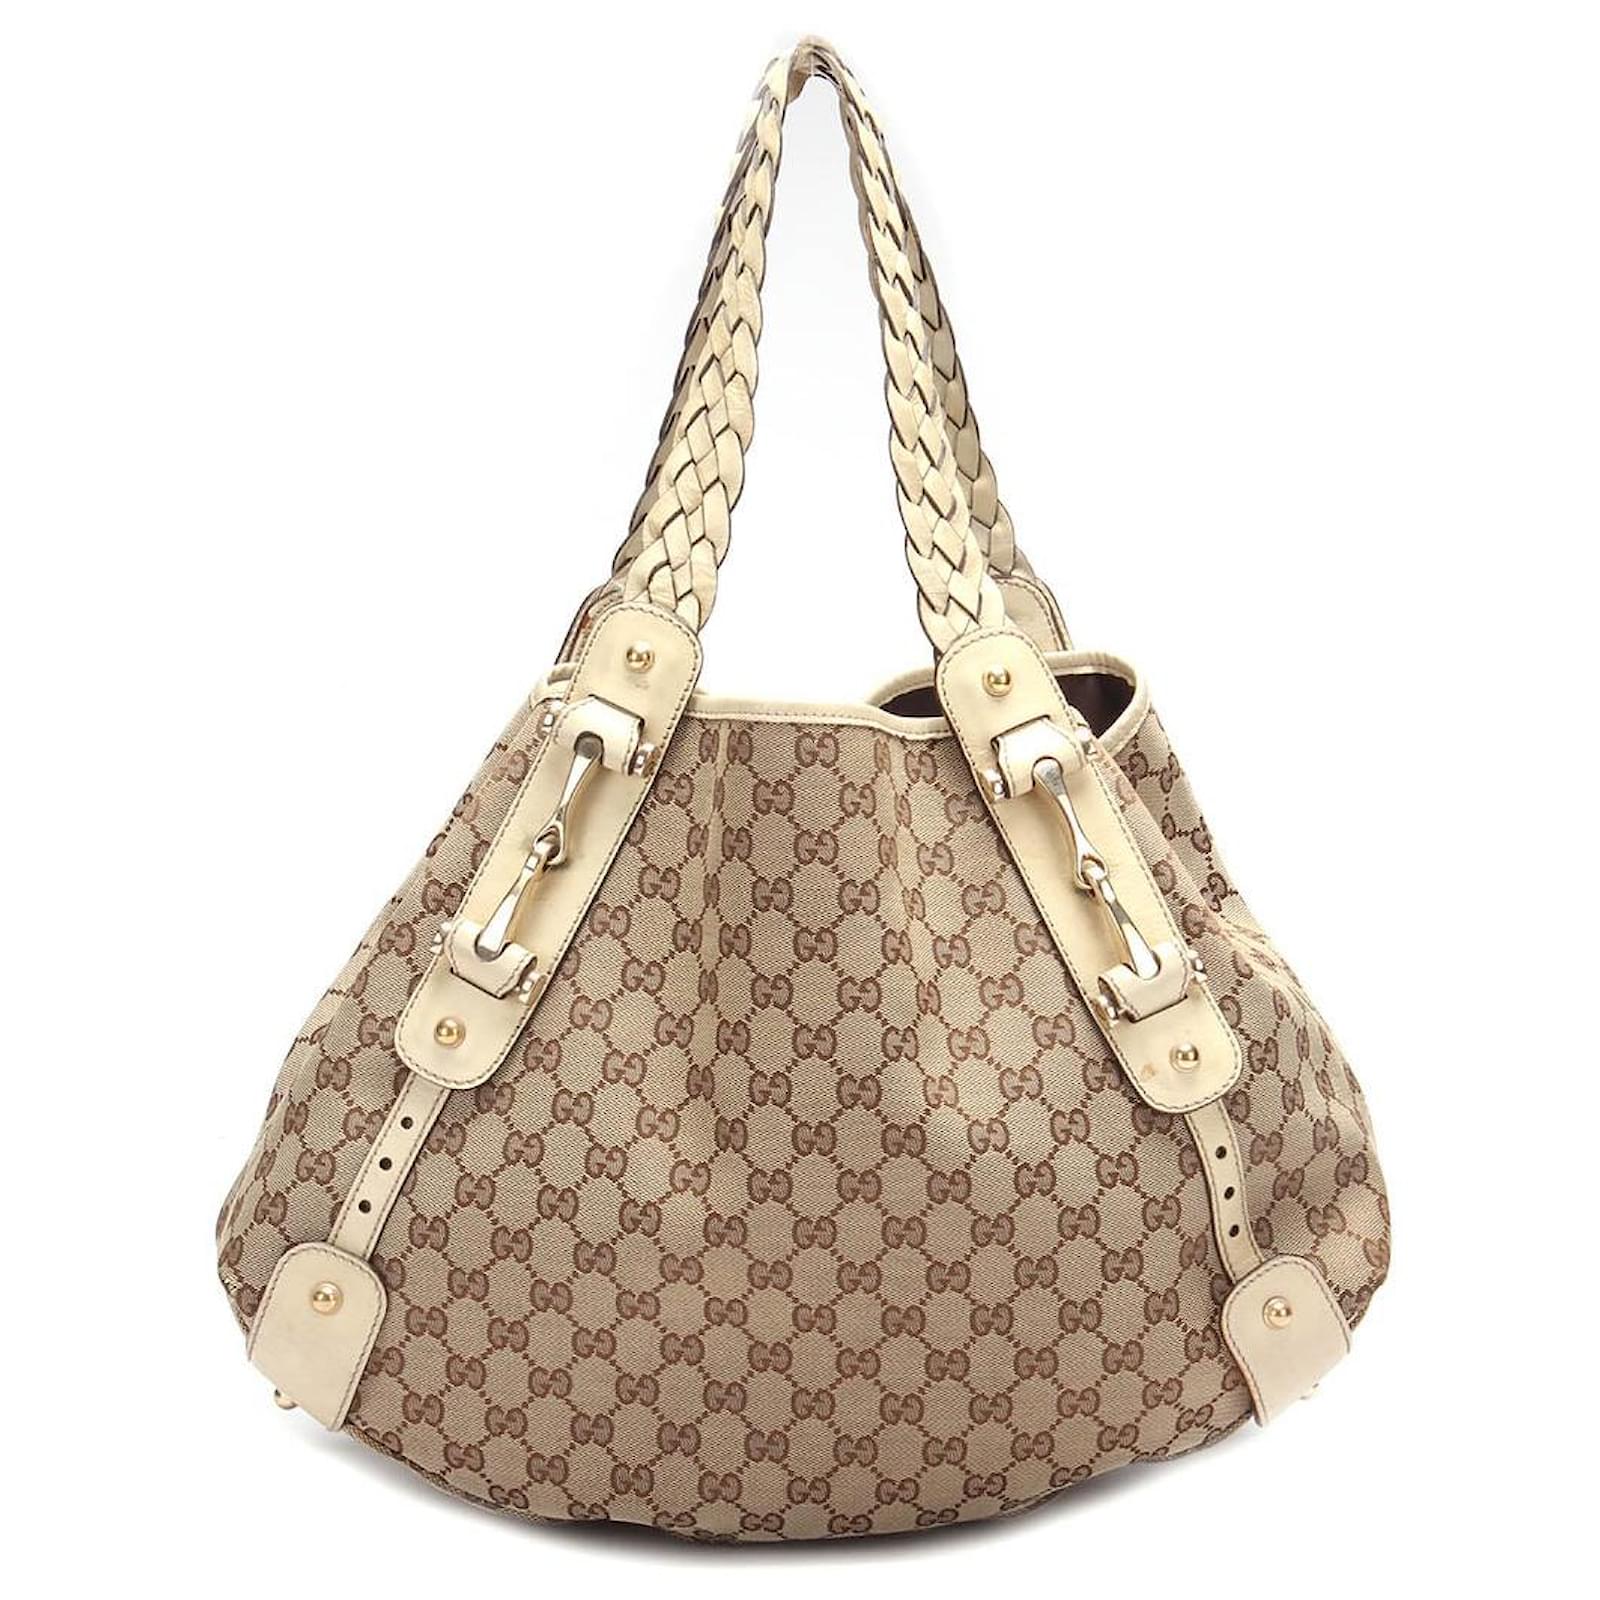 Gucci Women's Handbags, Authenticity Guaranteed